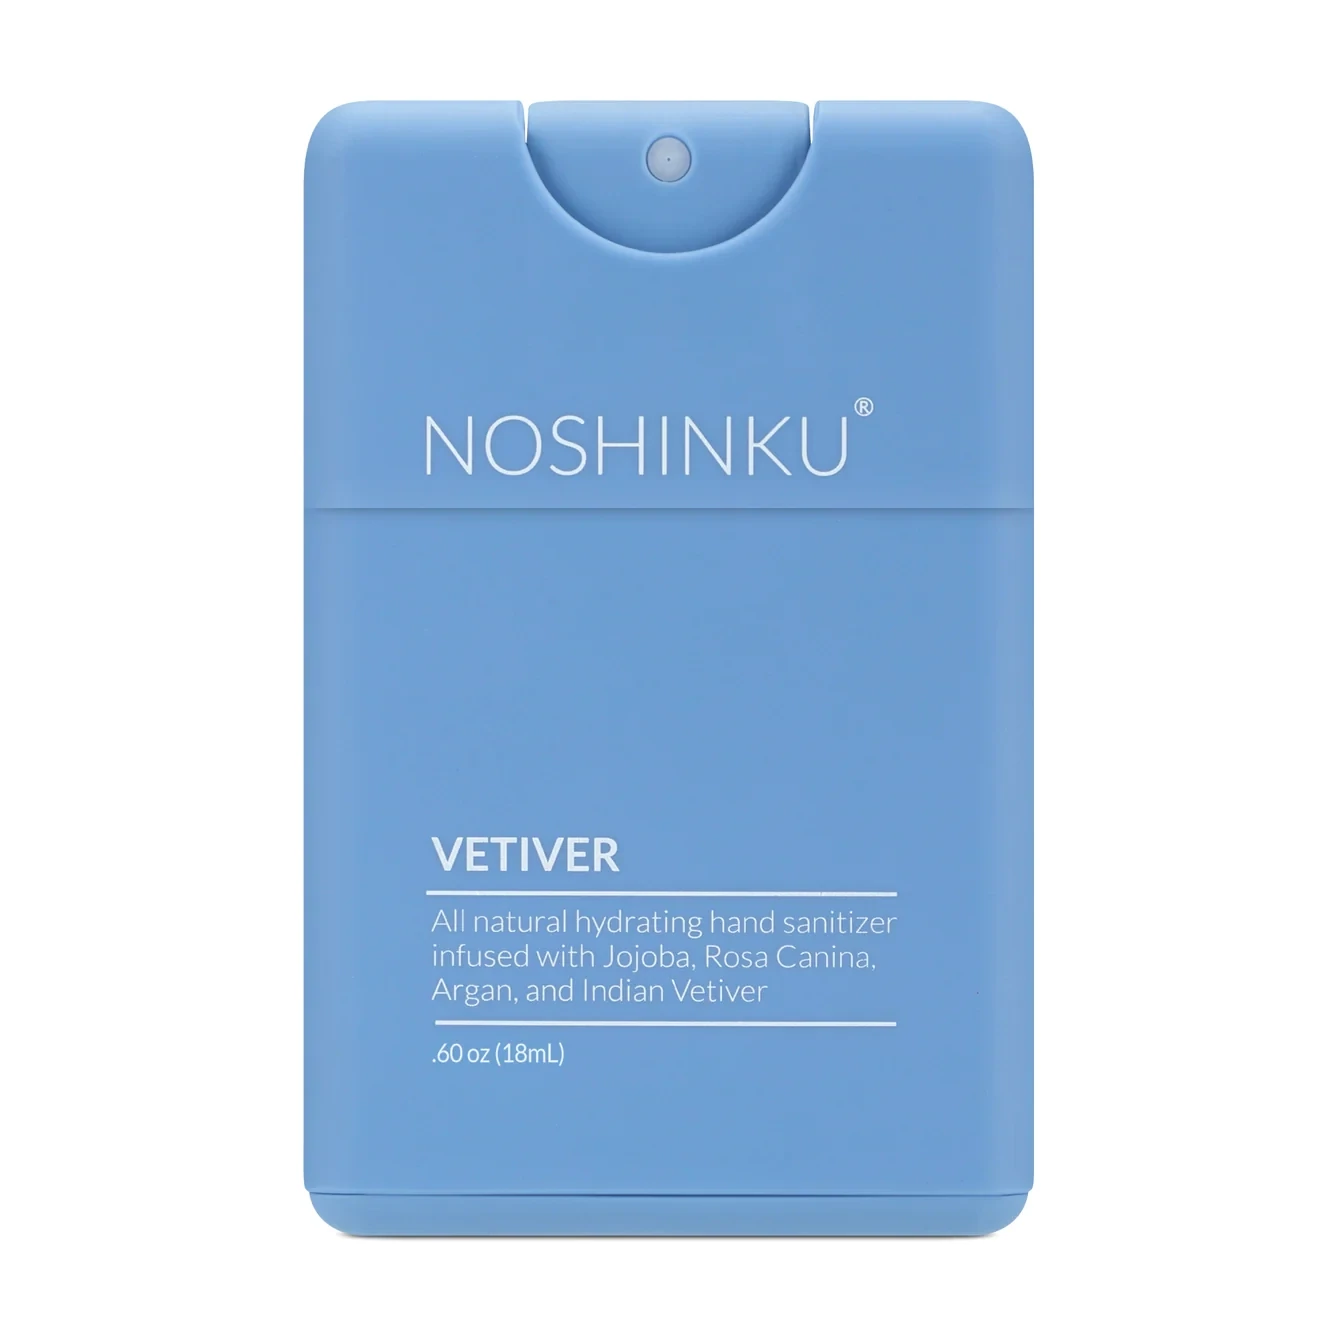 Refillable Vetiver Rejuvinating Pocket Cleanser